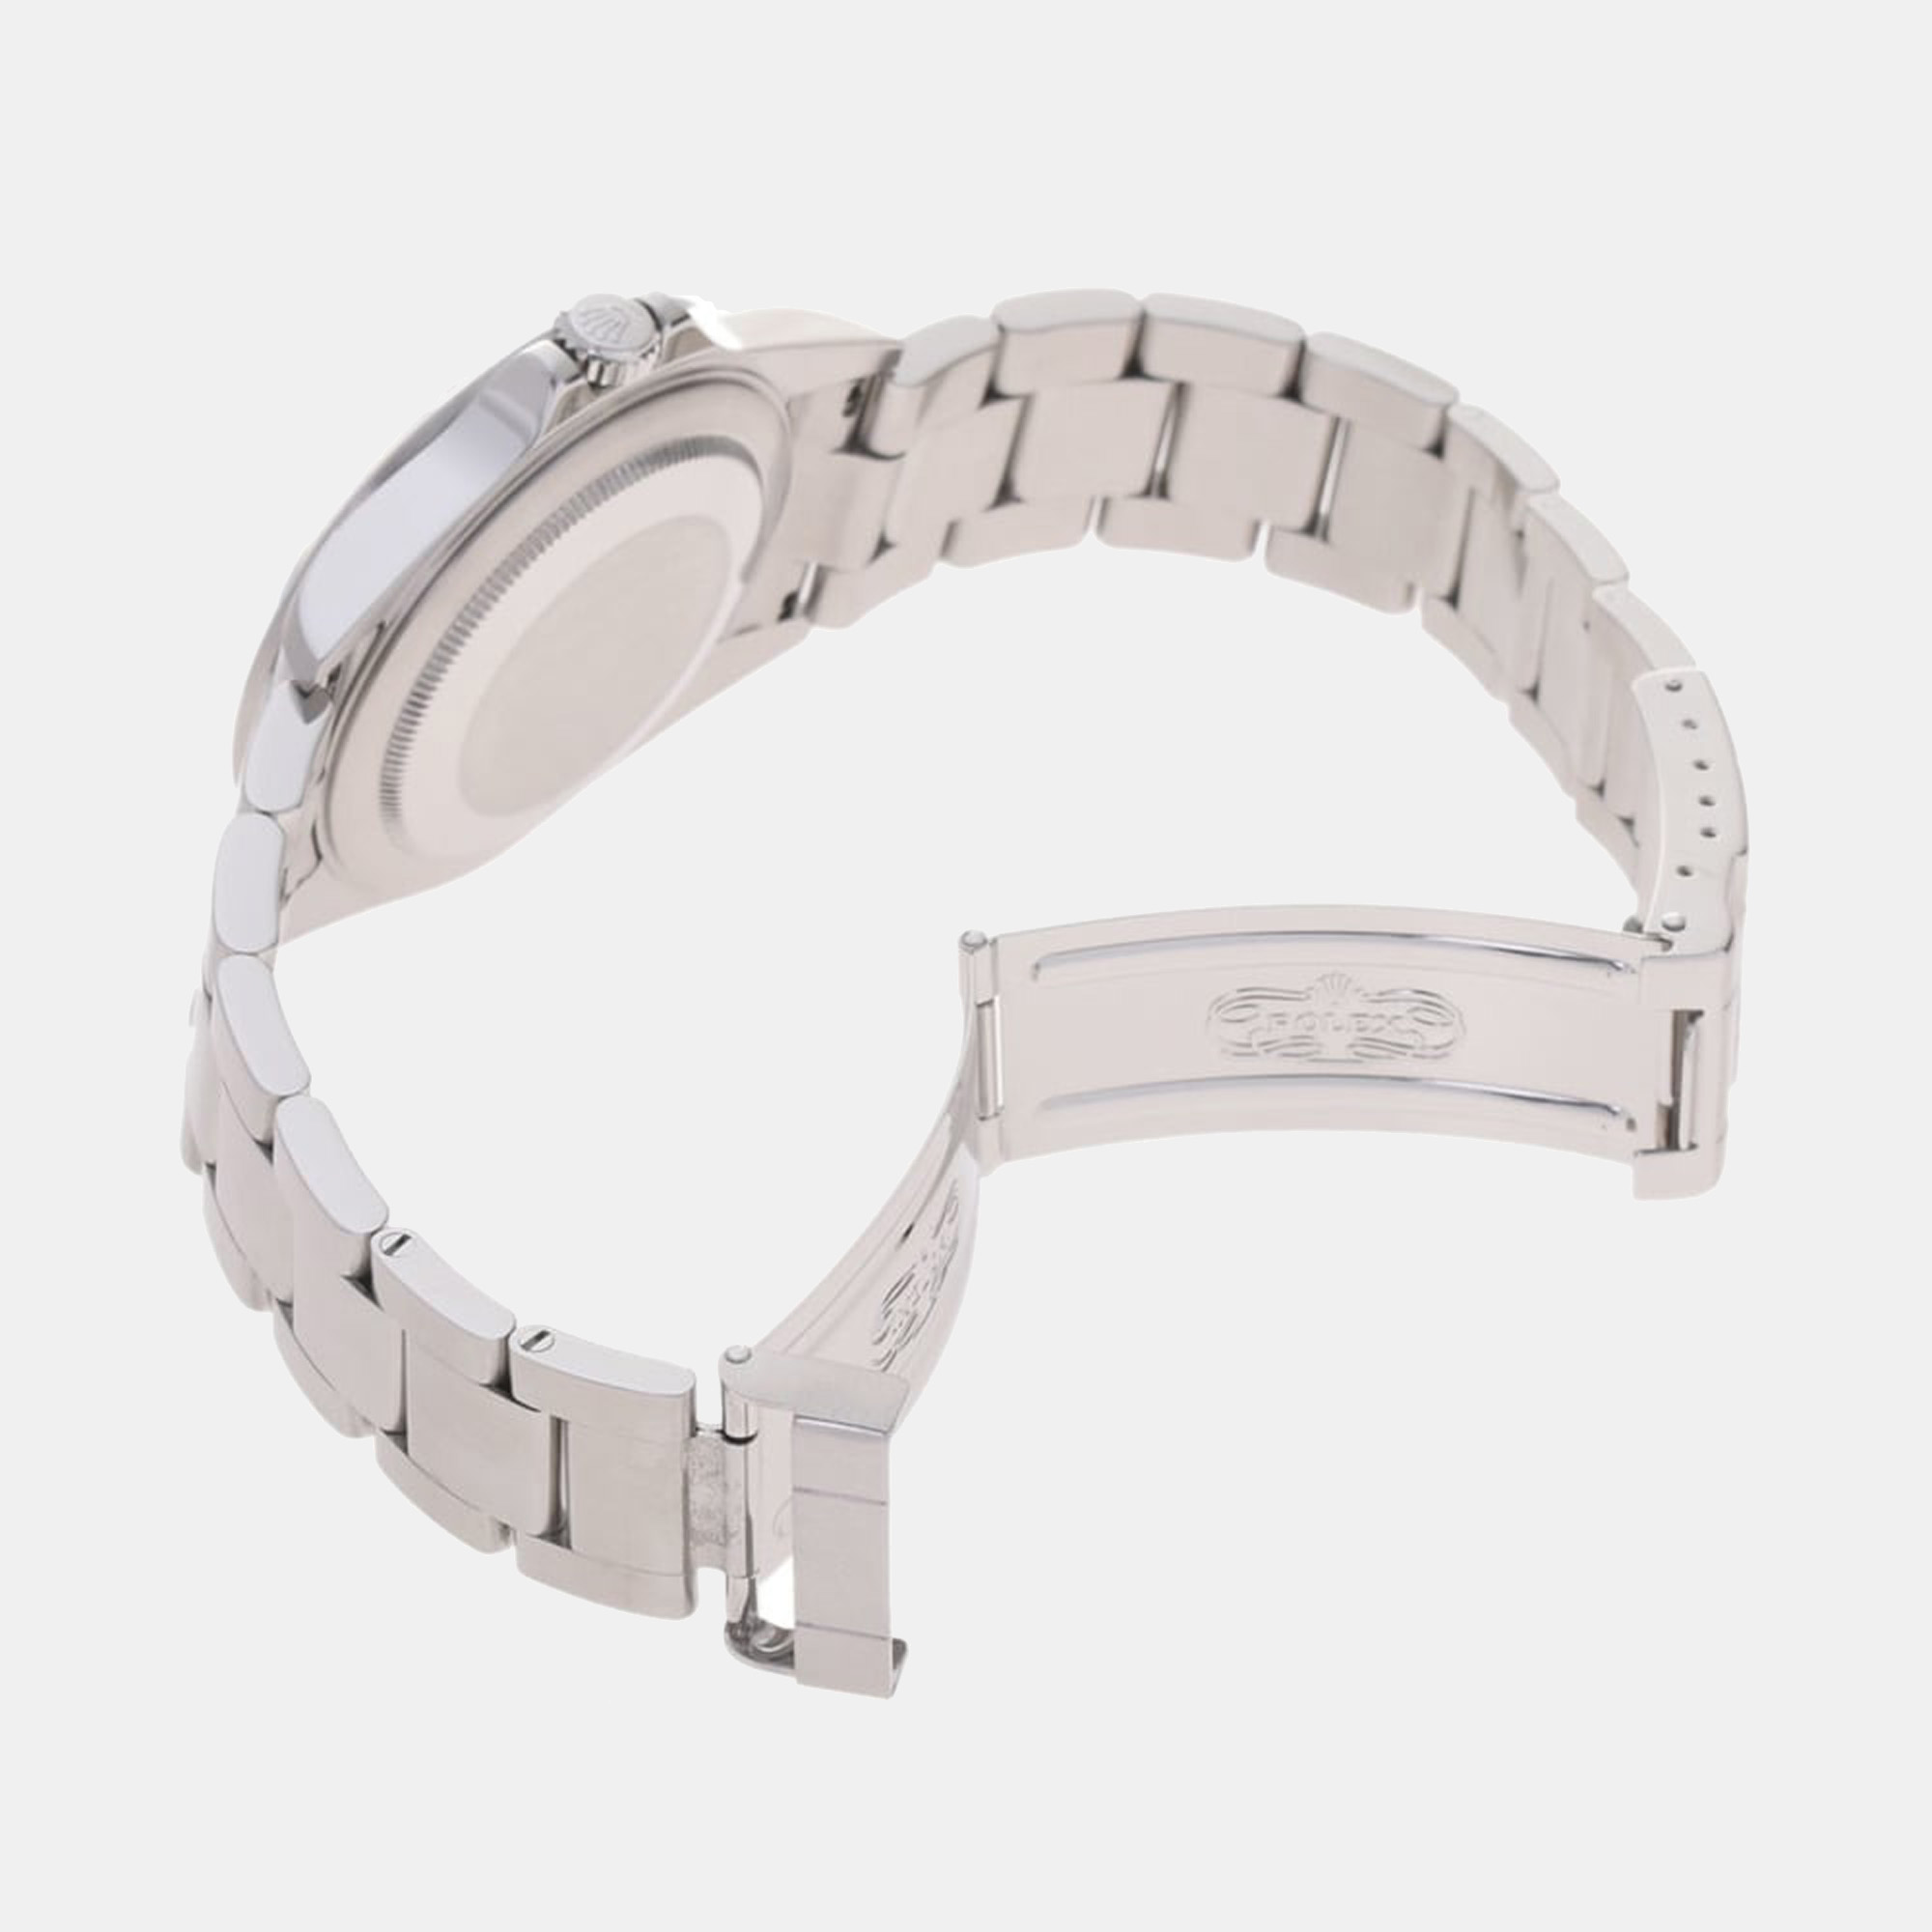 Rolex Black Stainless Steel Explorer 16570 Automatic Men's Wristwatch 40 Mm